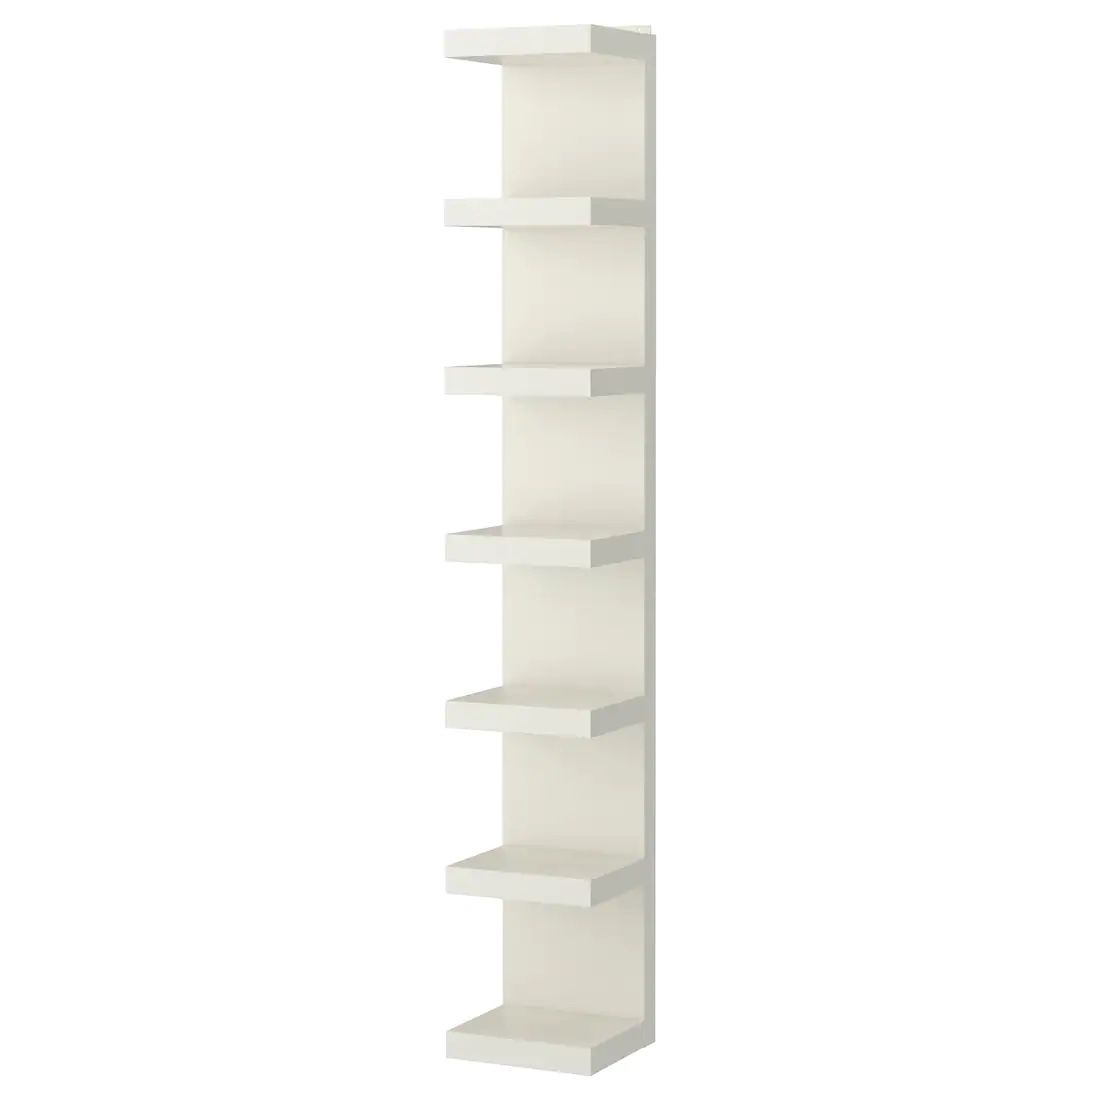 IKEA LACK Wall Shelf Unit